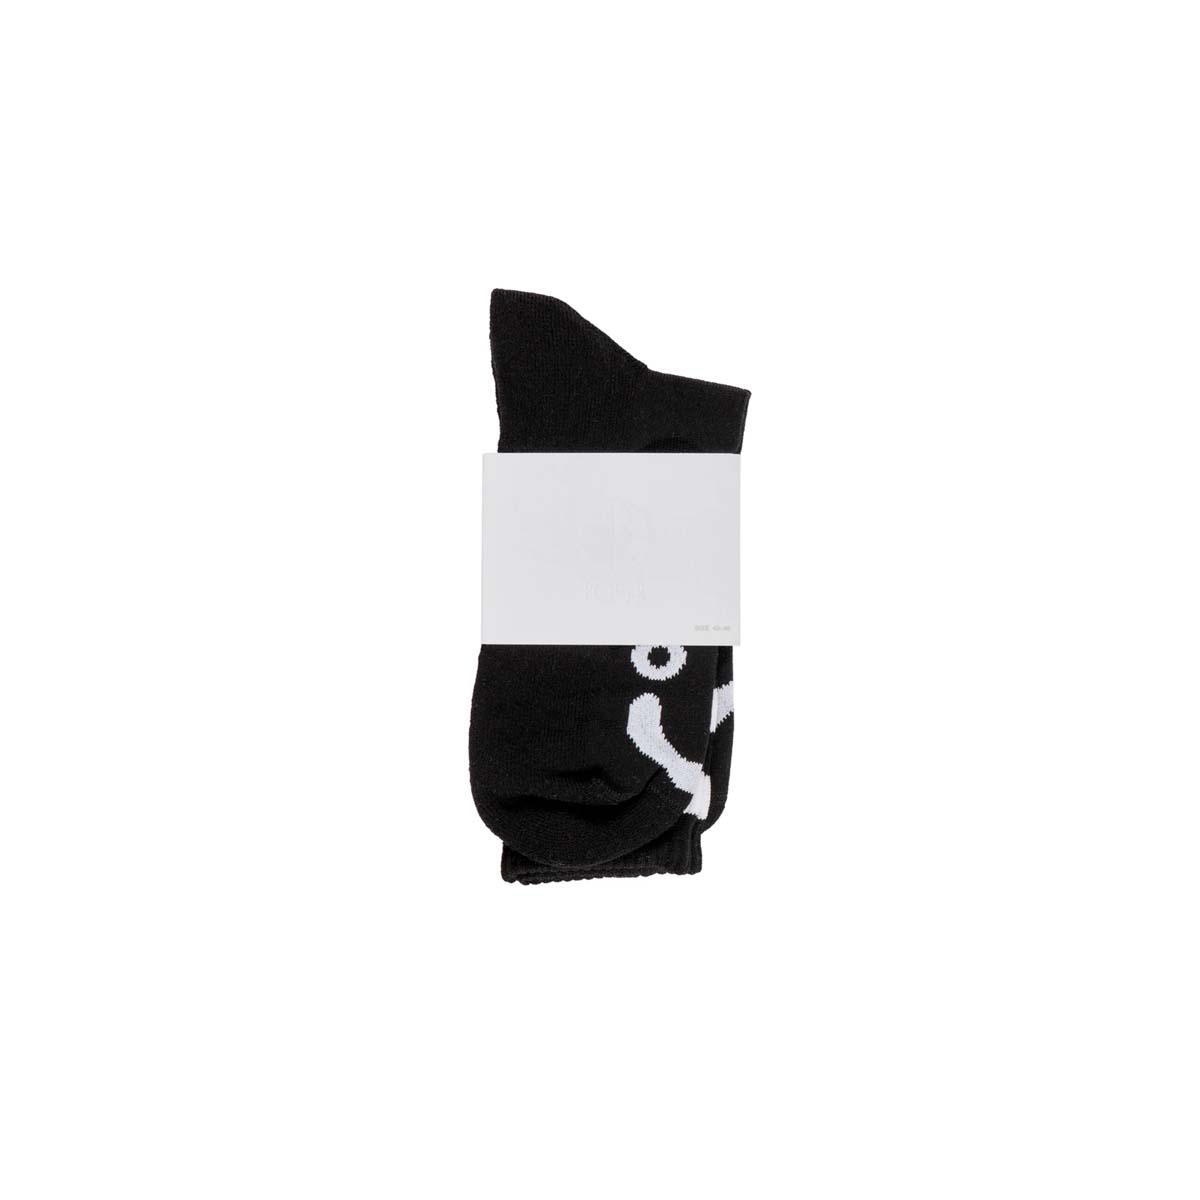 Polar Skate Co. Happy Sad Socks (Black) - Apple Valley Emporium